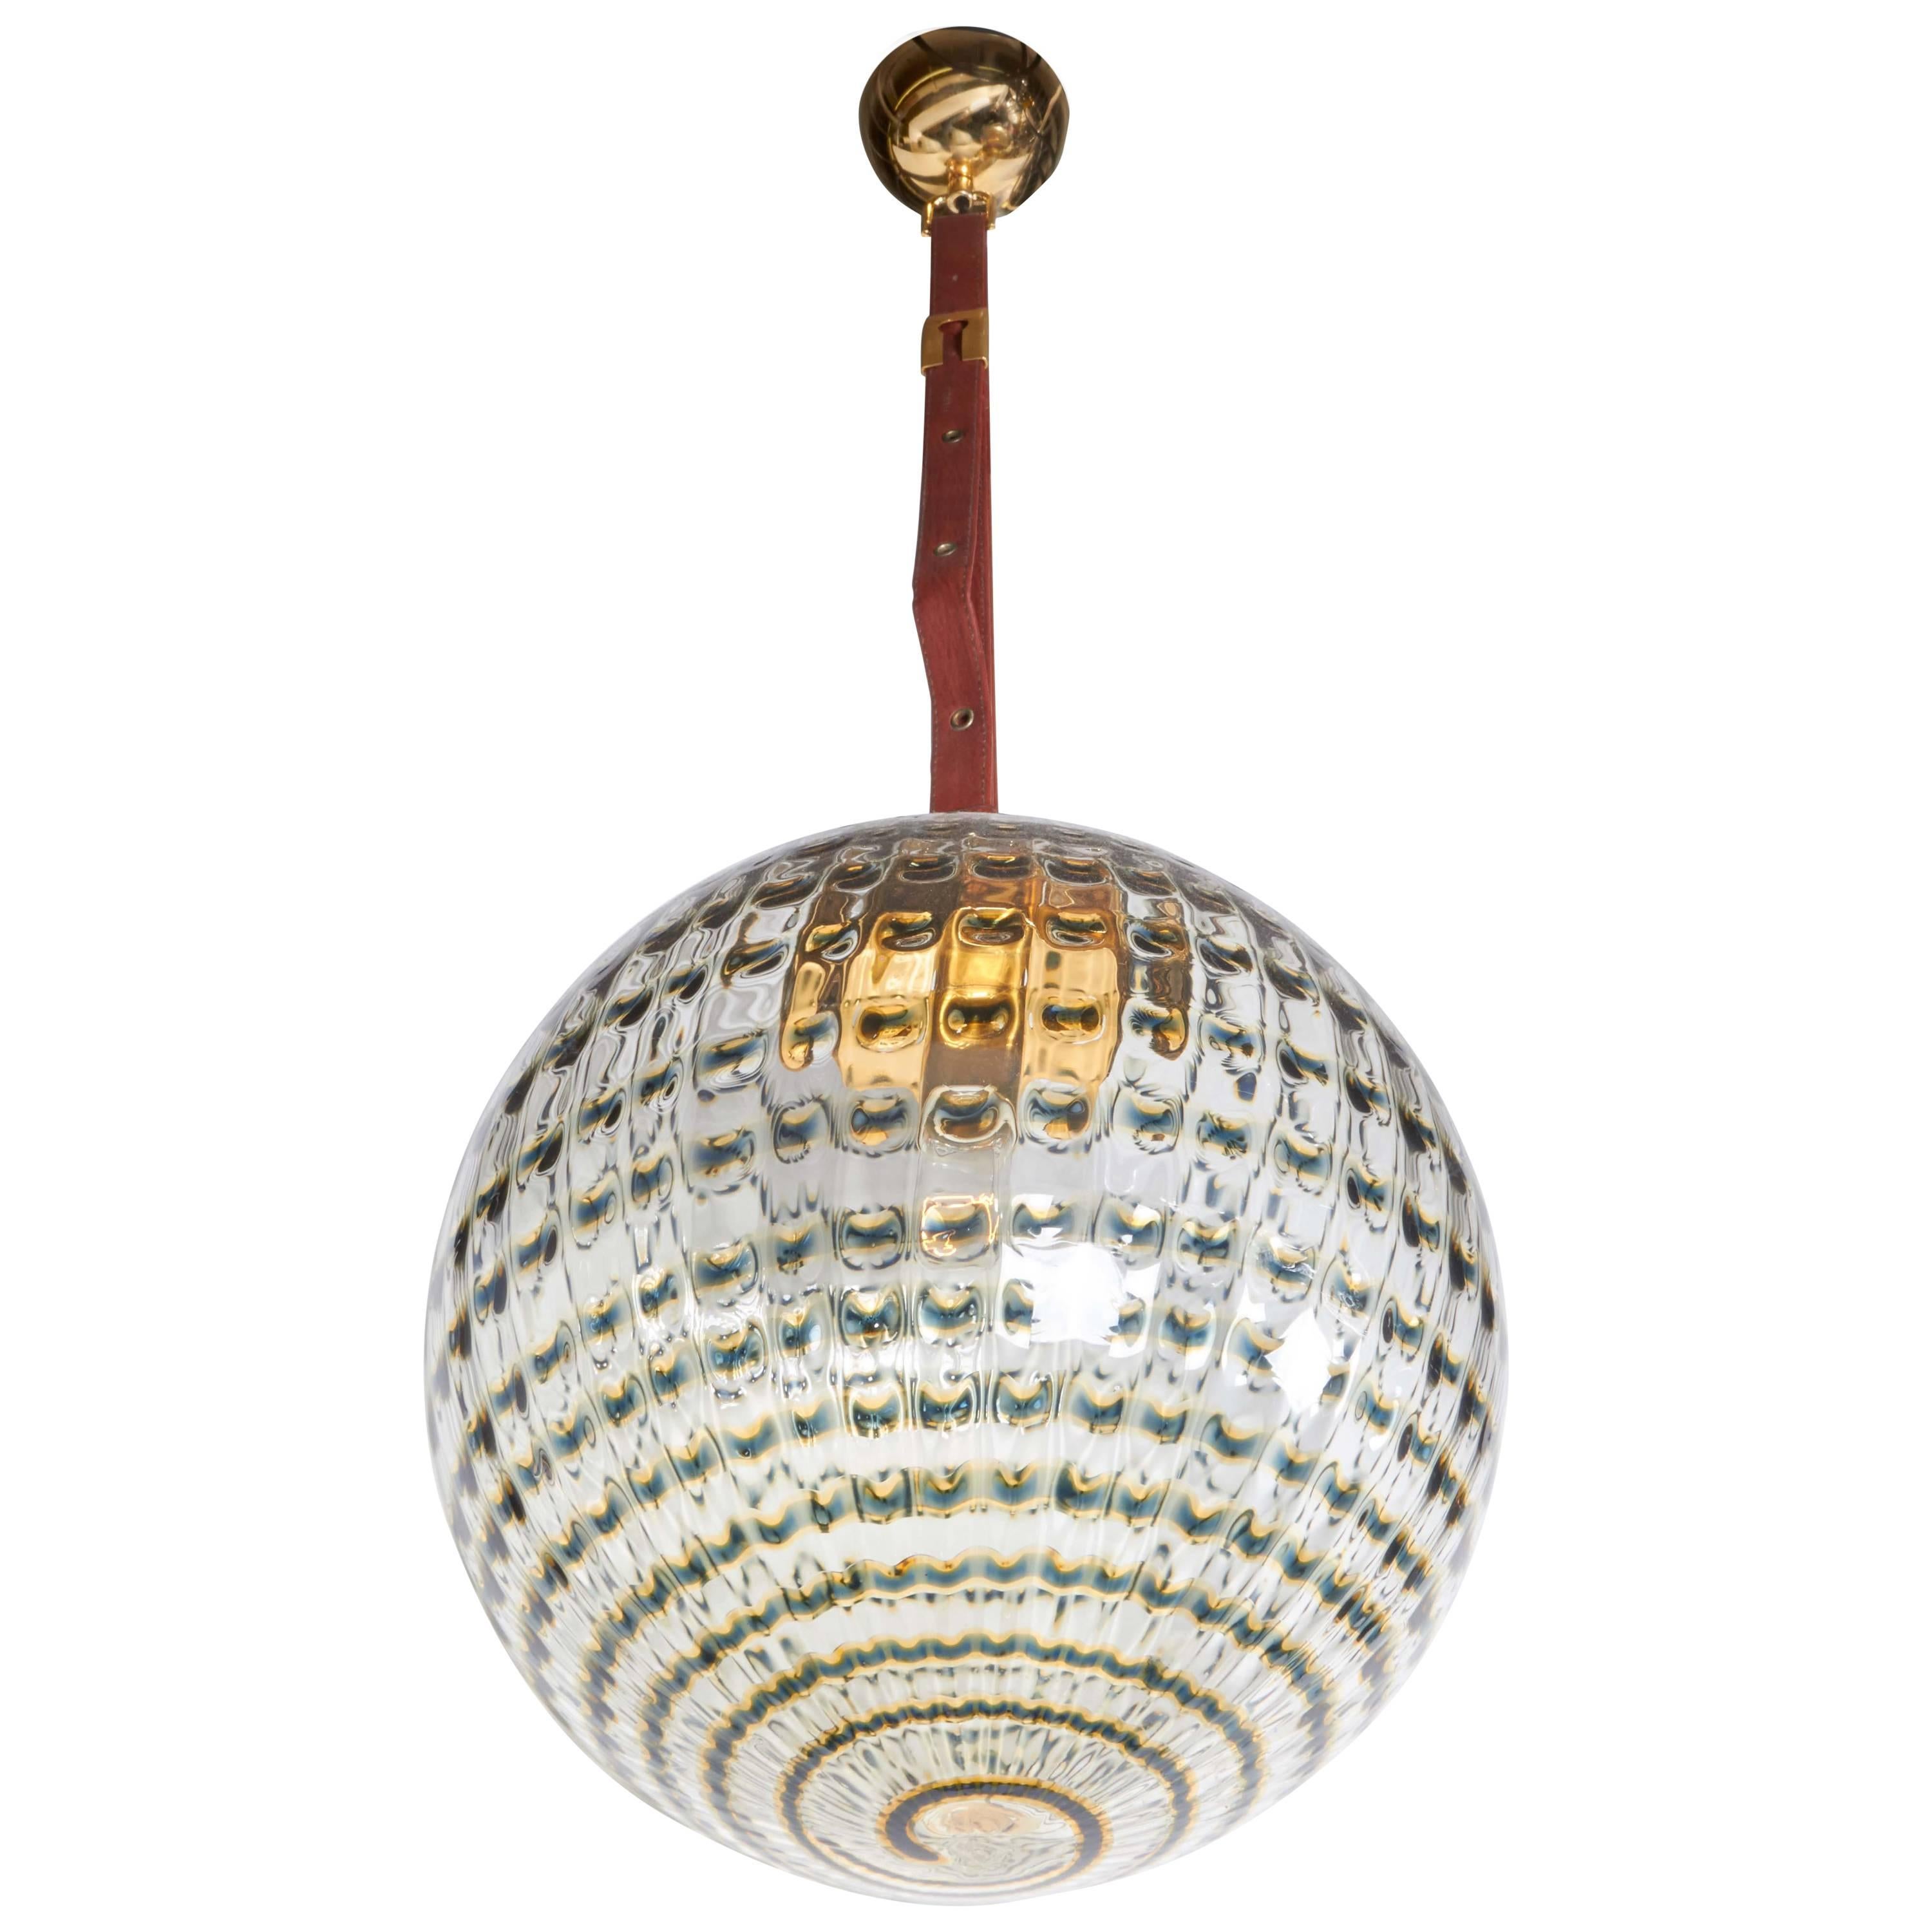 Targetti 1970s Globe Pendant Light